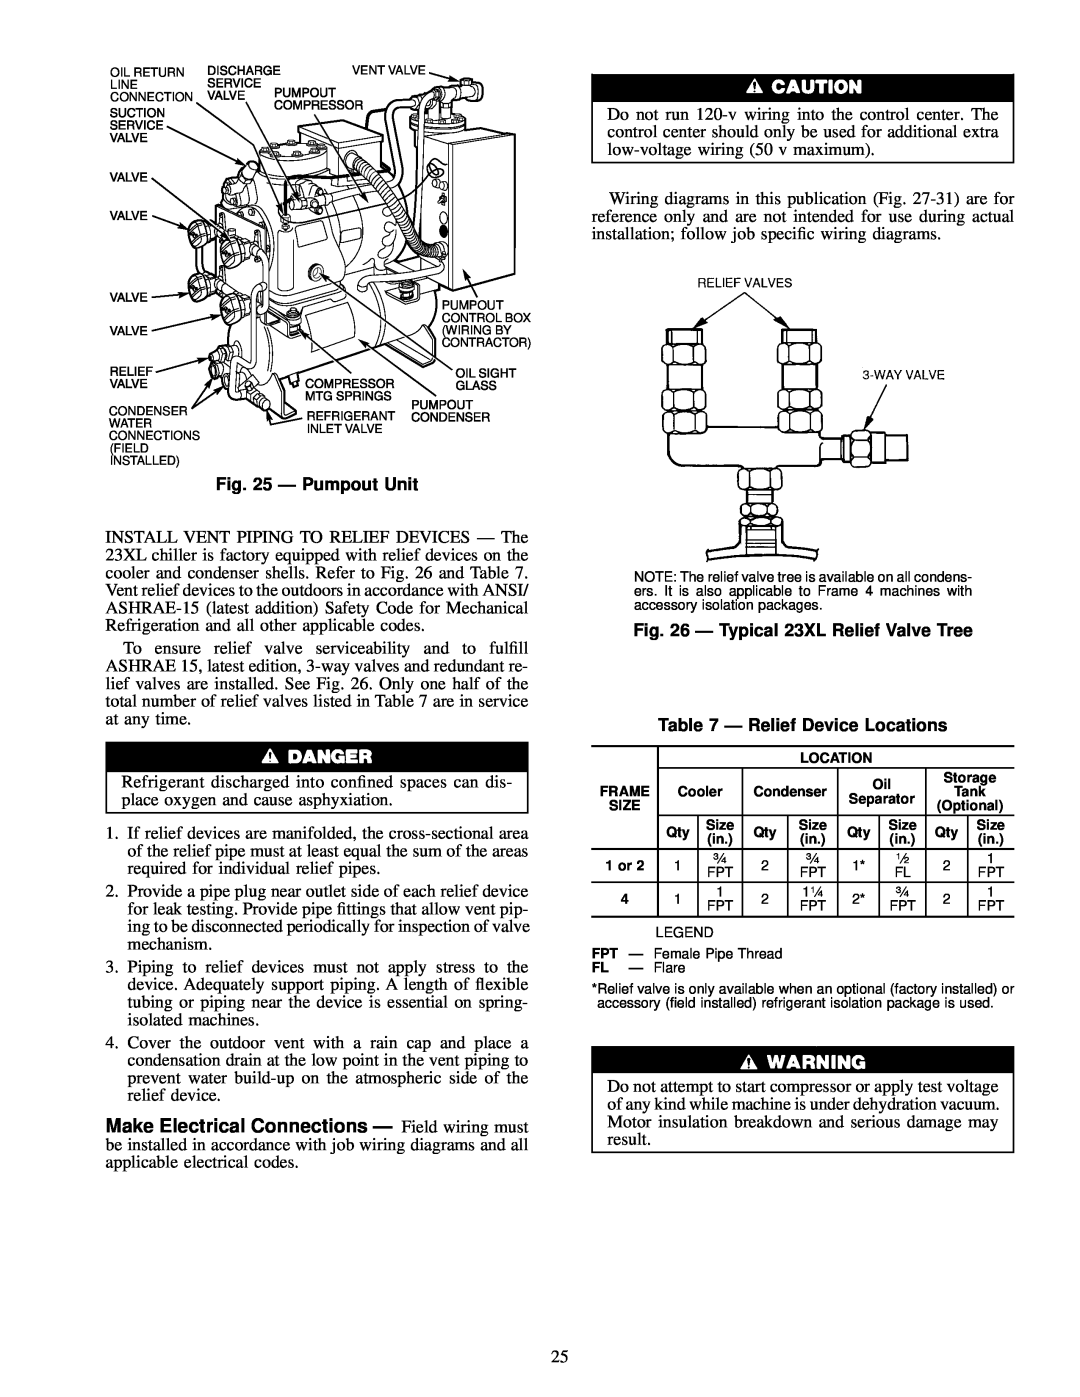 Carrier 23 XL installation instructions Ð Pumpout Unit, Ð Typical 23XL Relief Valve Tree, Ð Relief Device Locations 